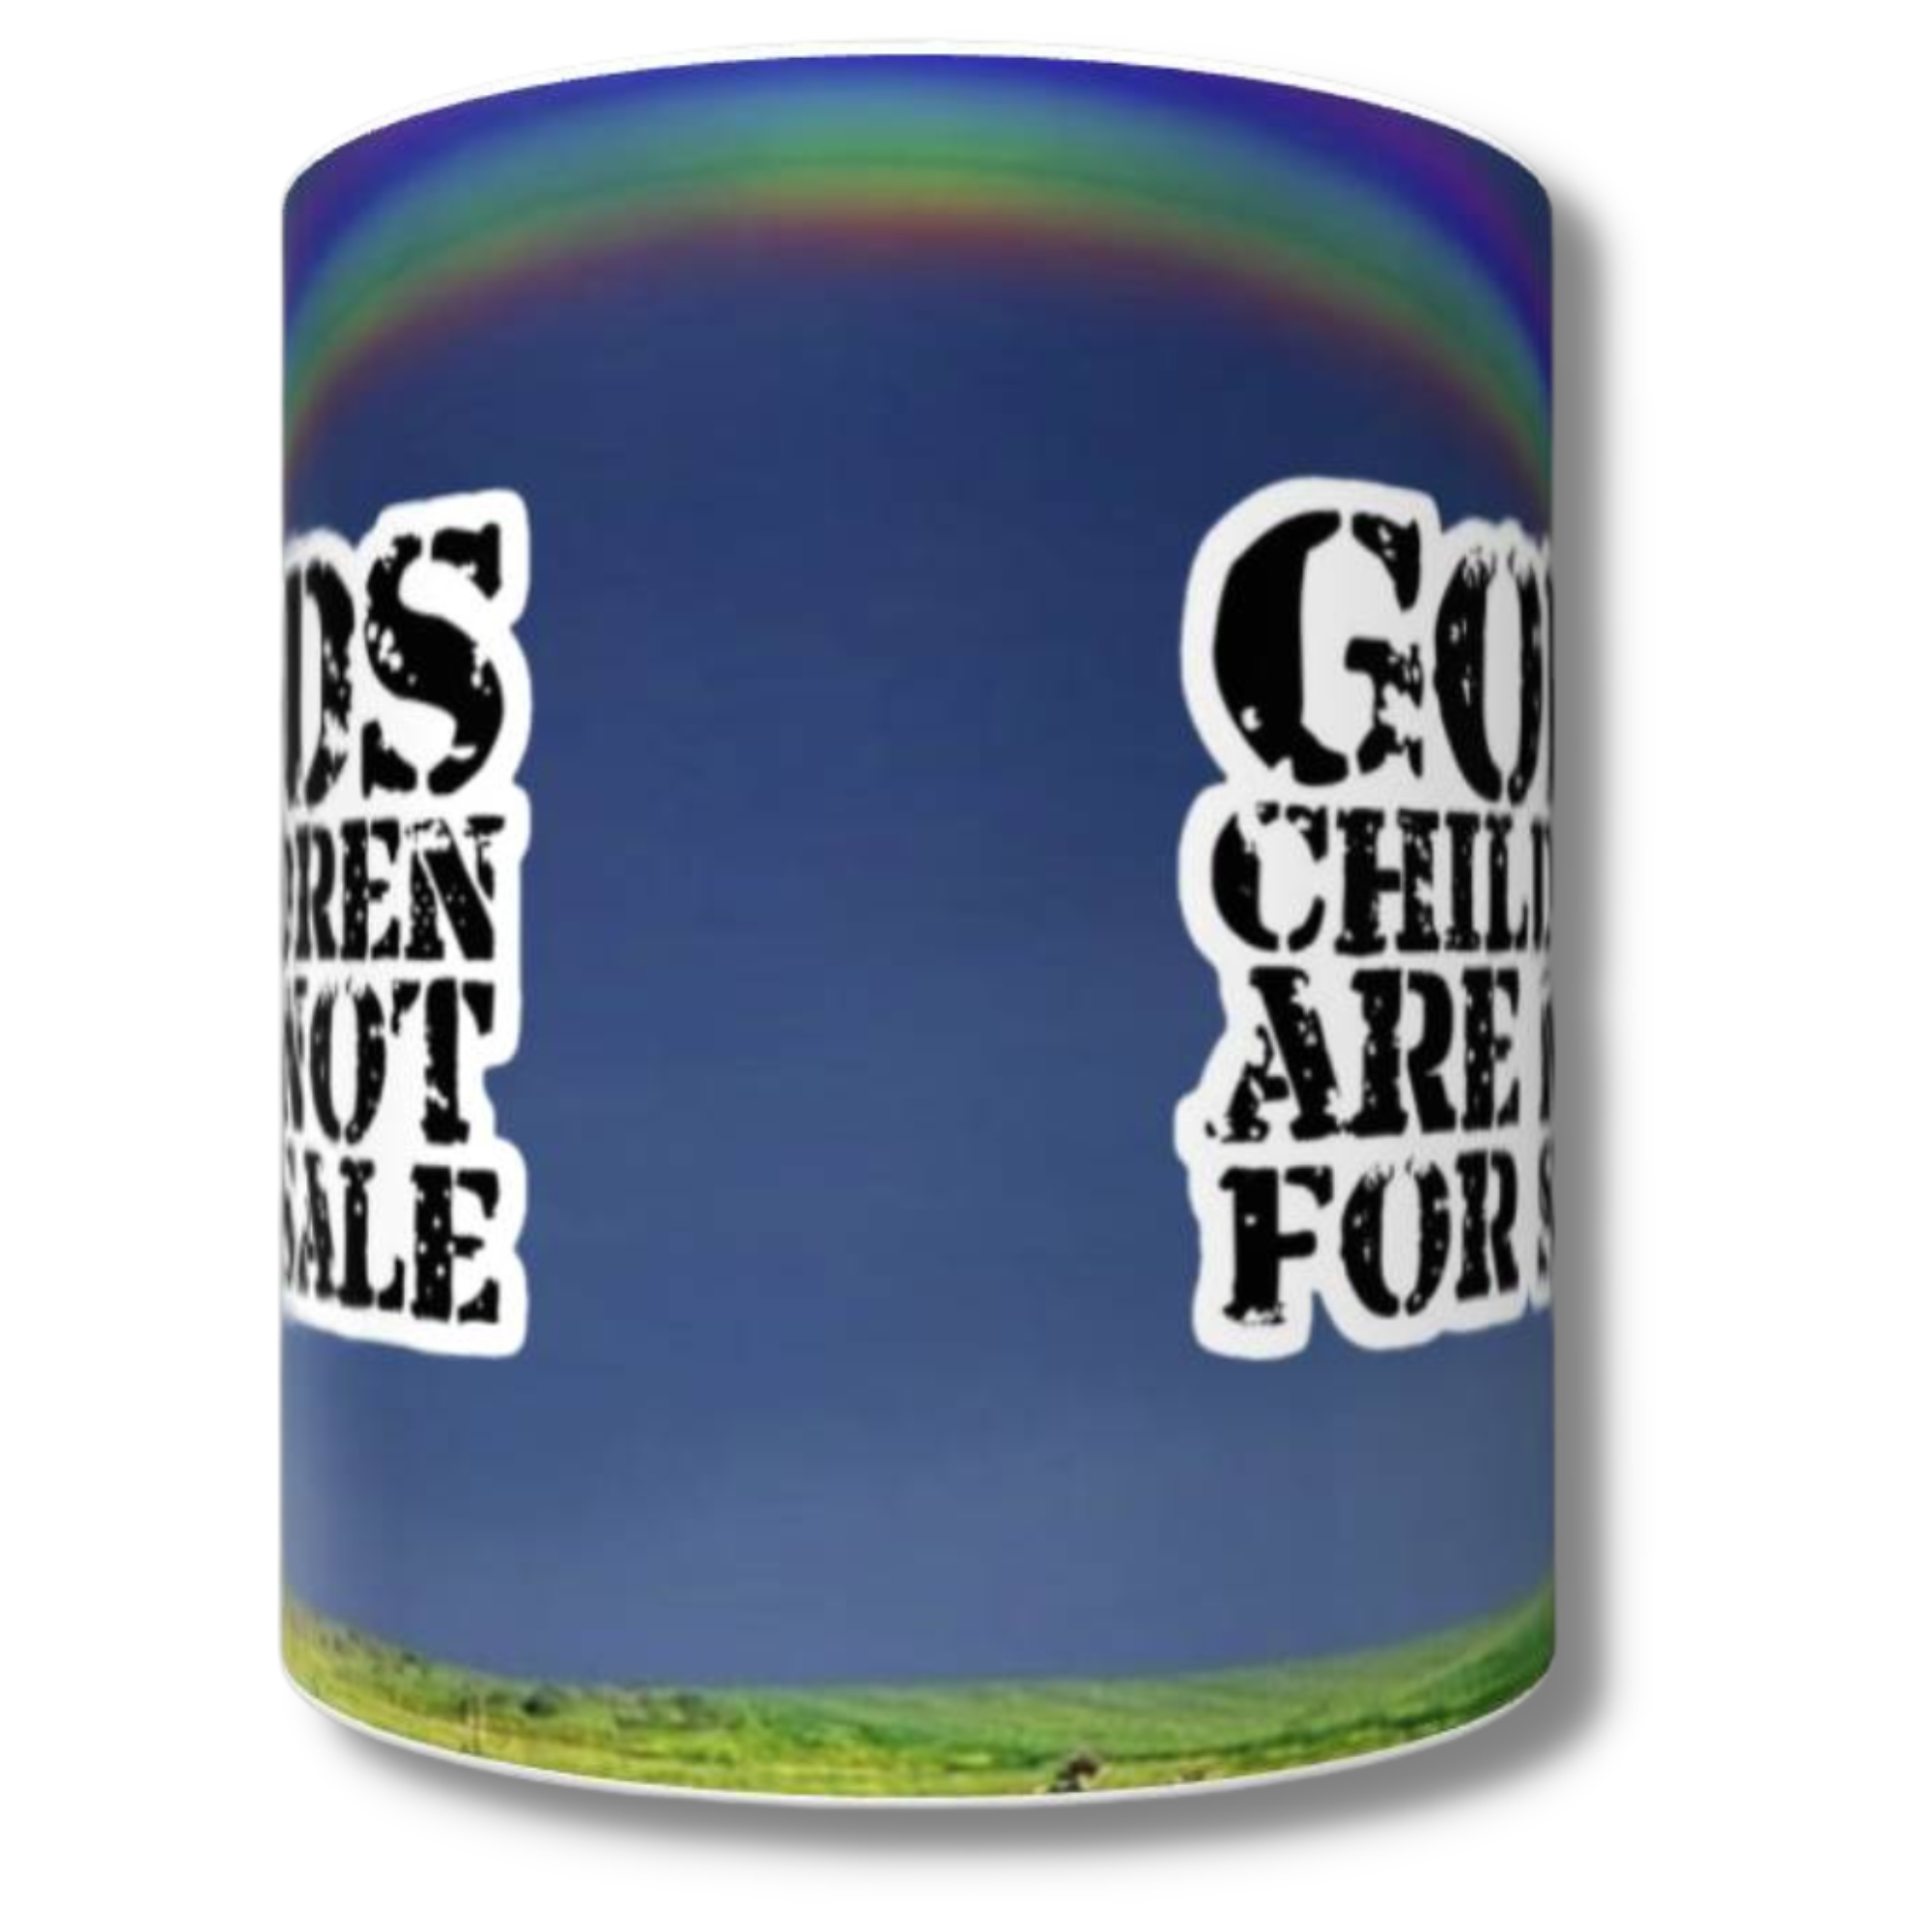 God's Children are not for Sale Mug (Rainbow)